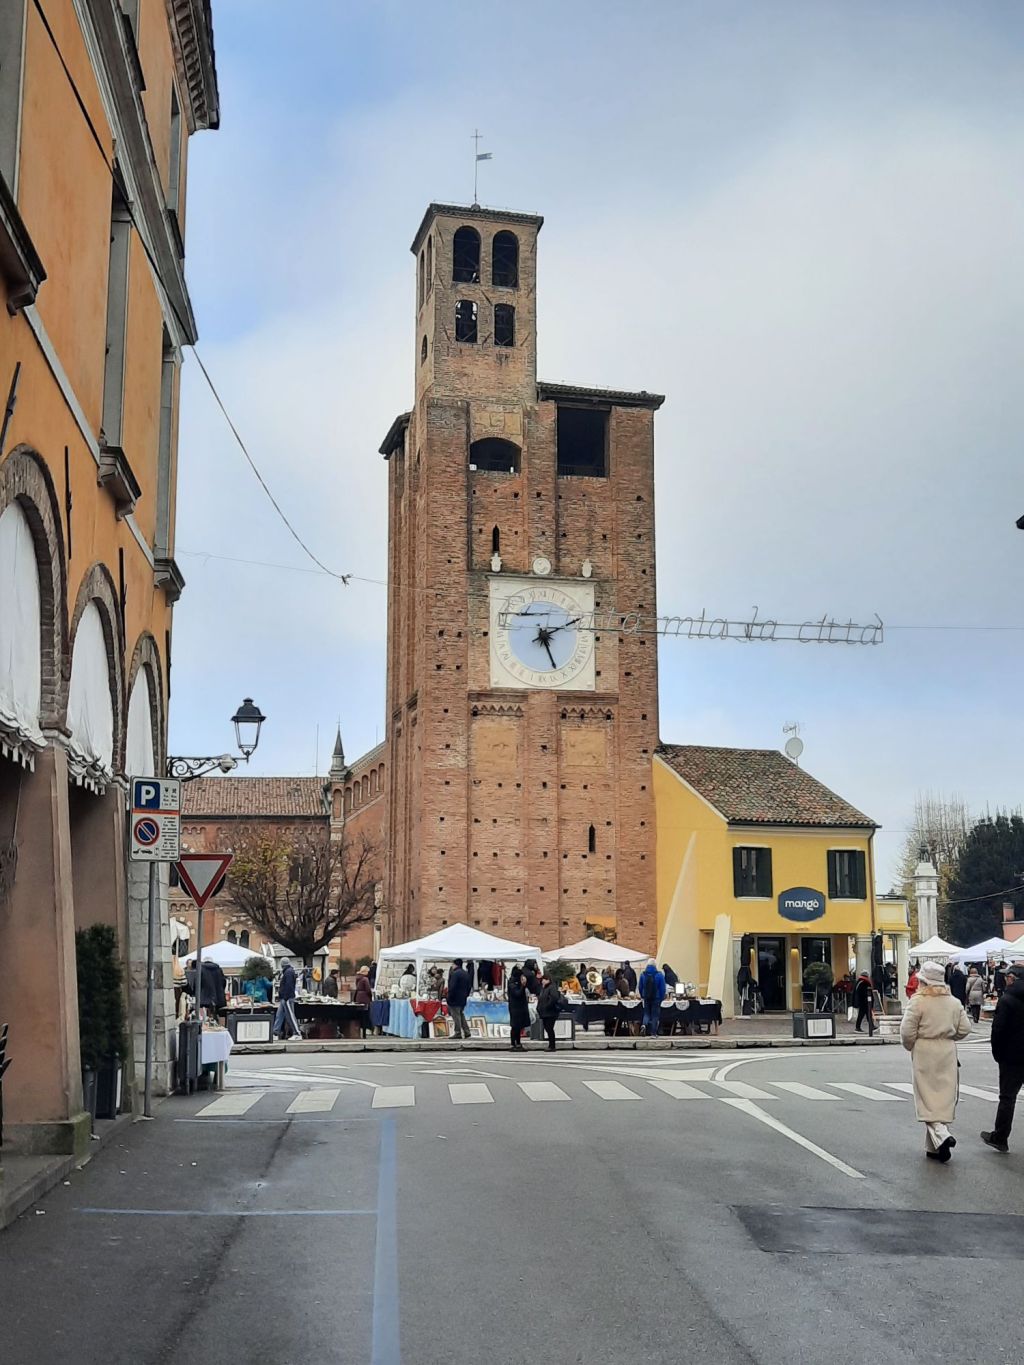 La torre Carrarese de Piove di Sacco, Veneto.